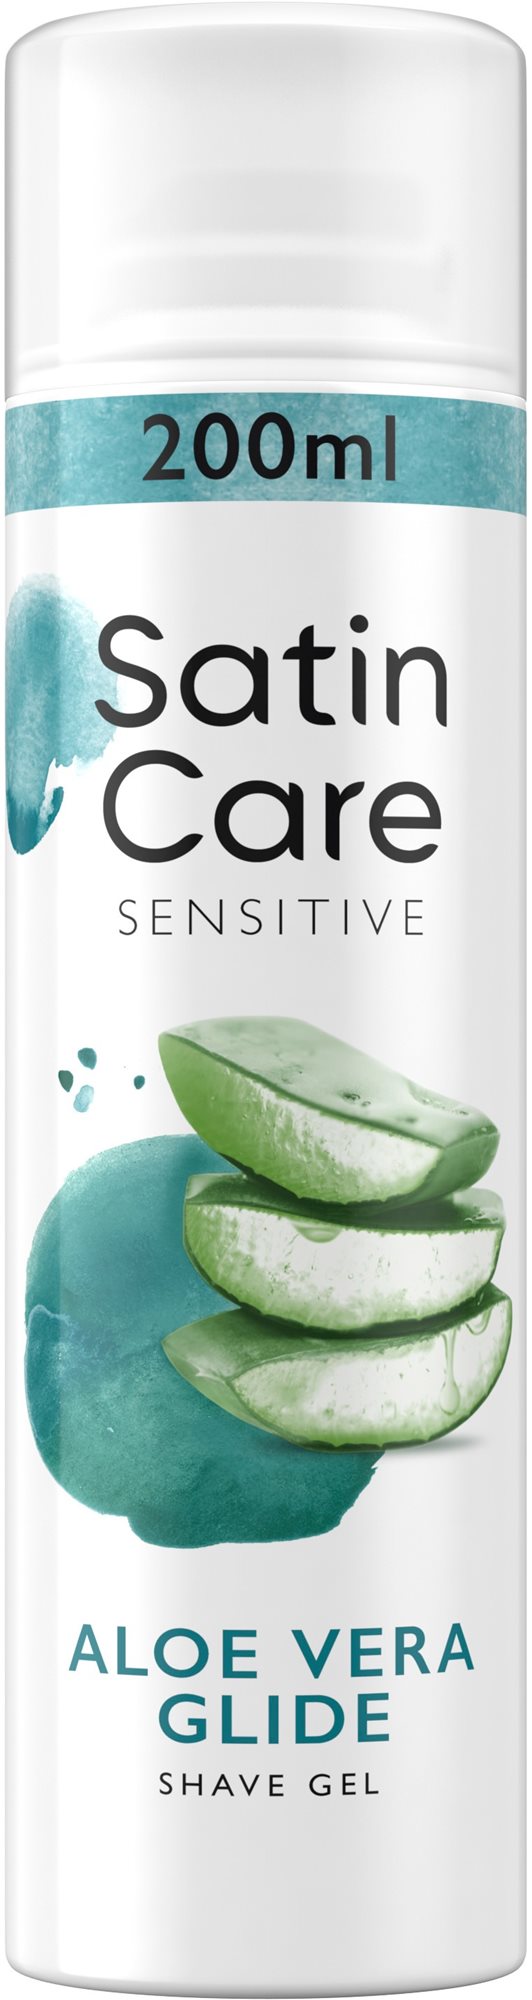 GILLETTE Satin Care Sensitive (200 ml)